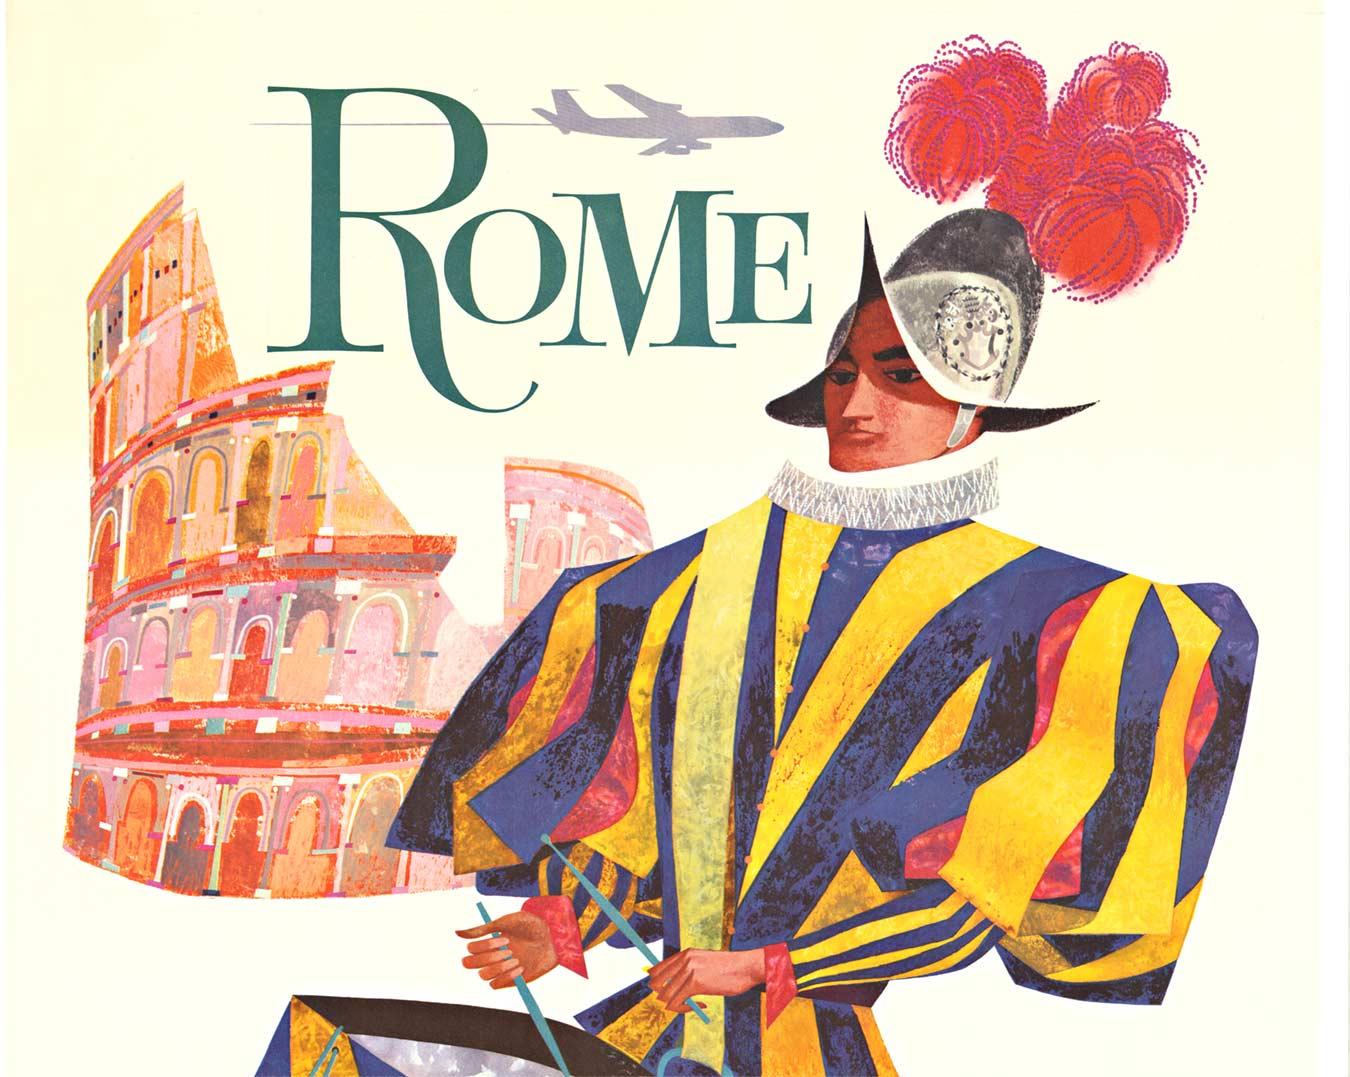 Original Rome Fly TWA Jets vintage American travel poster - Print by David Klein